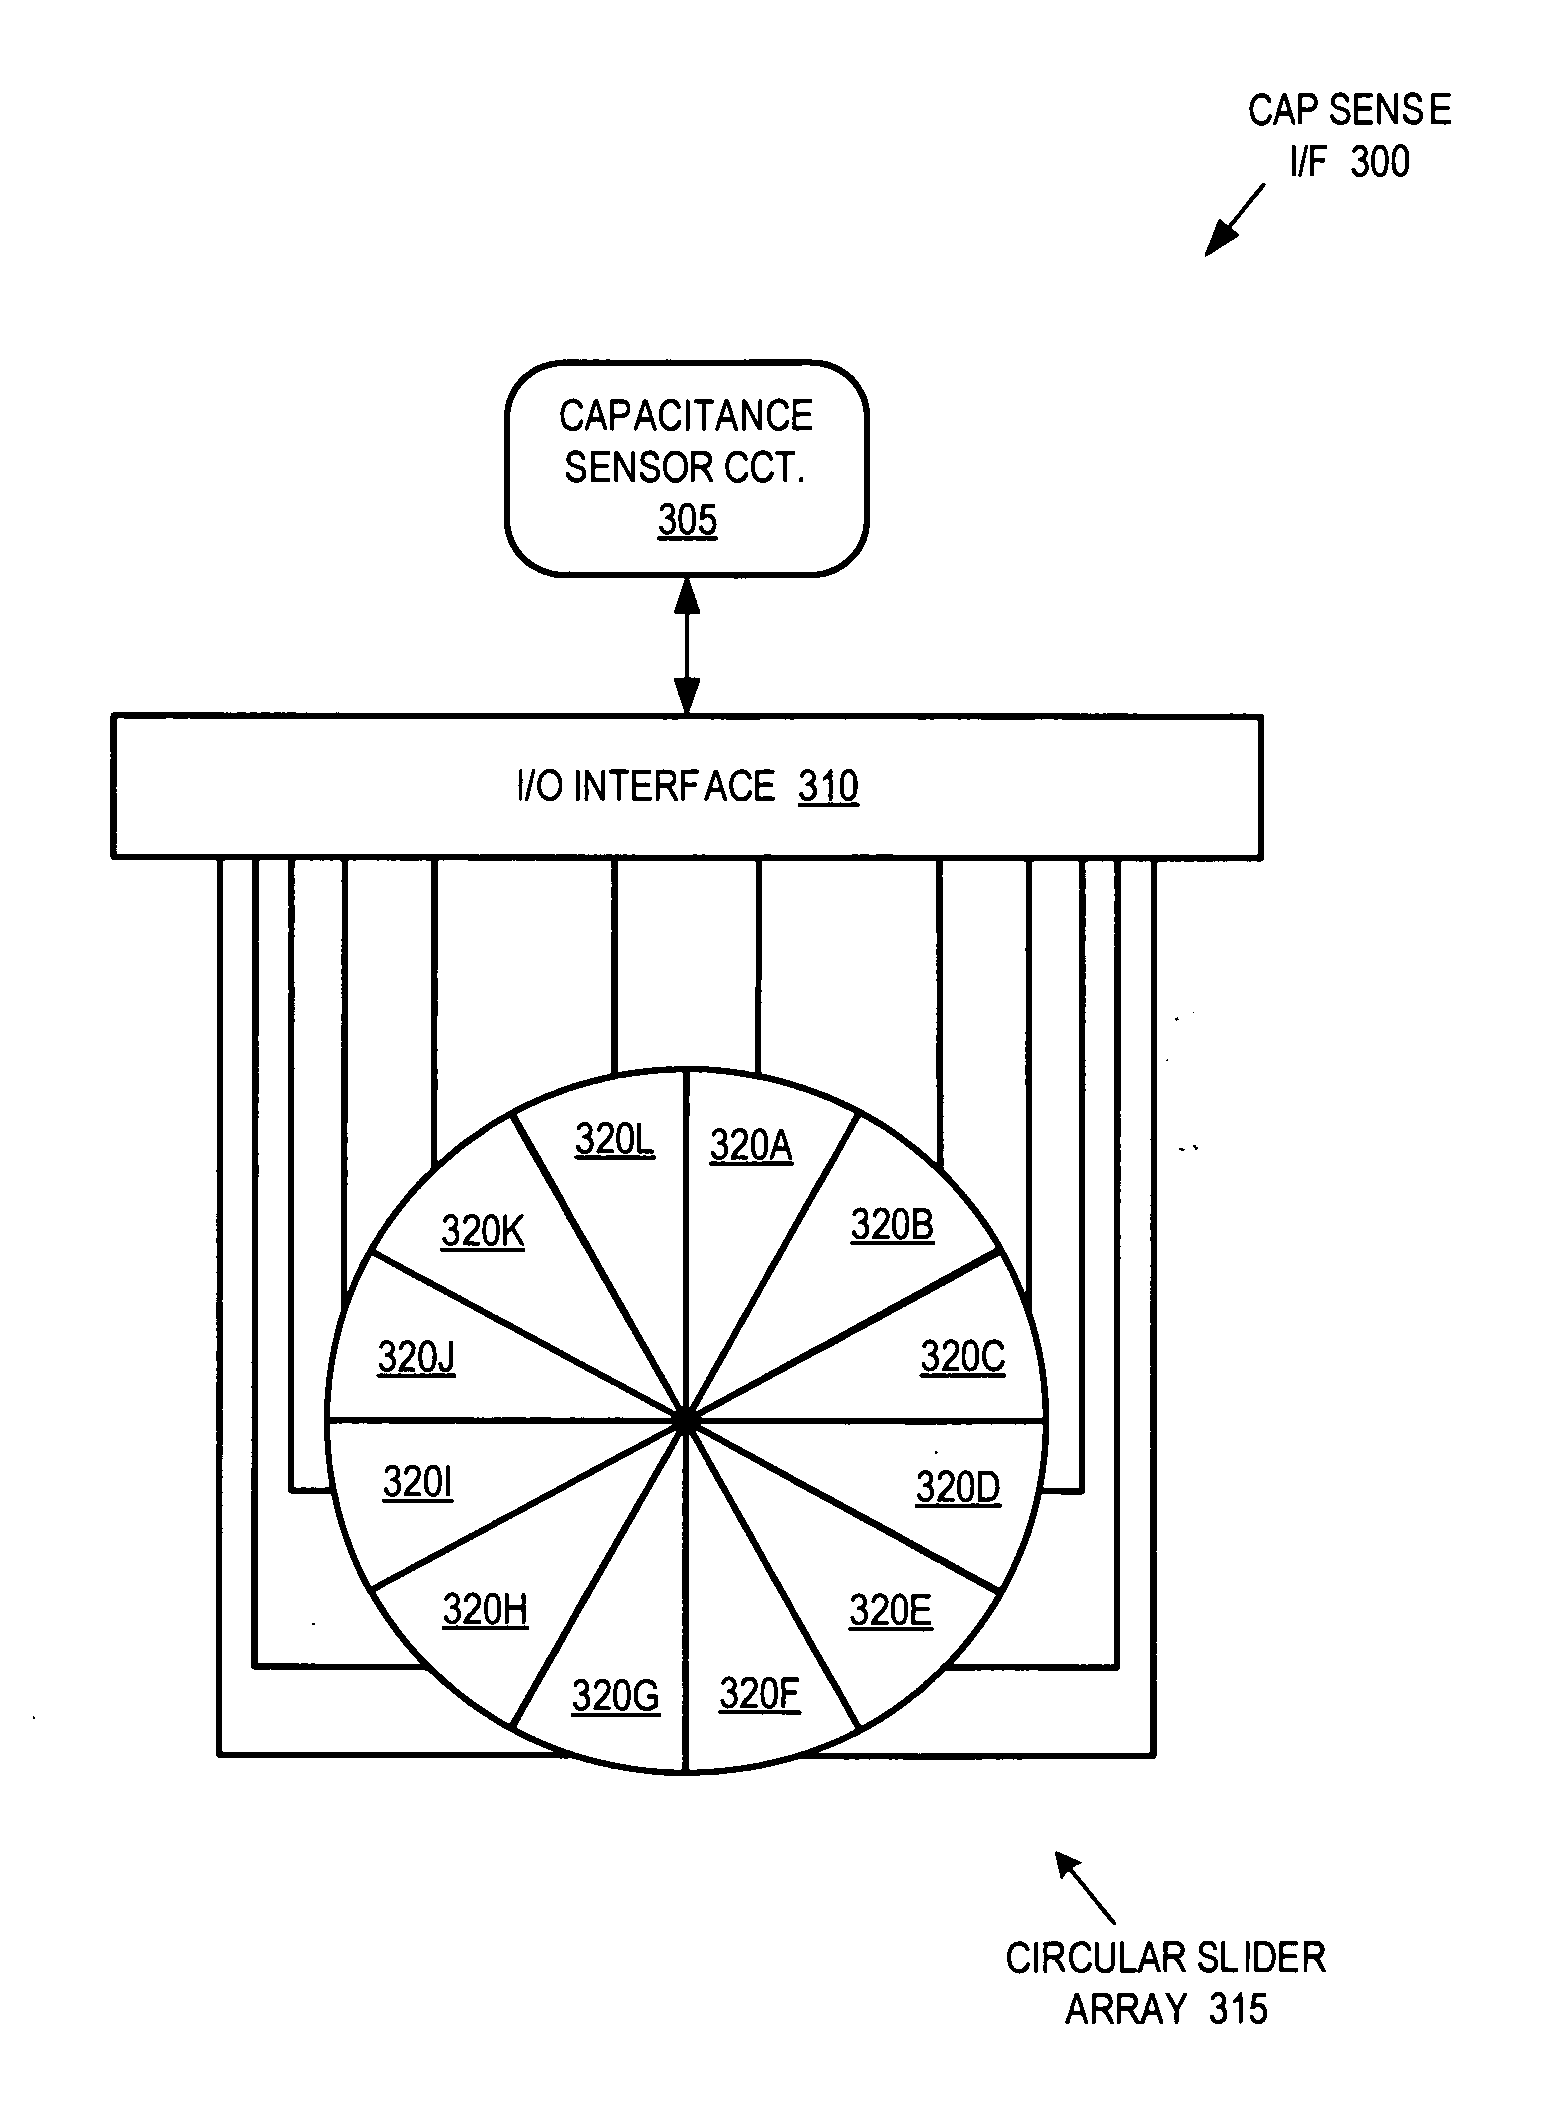 Technique for increasing the sensitivity of capacitive sensor arrays